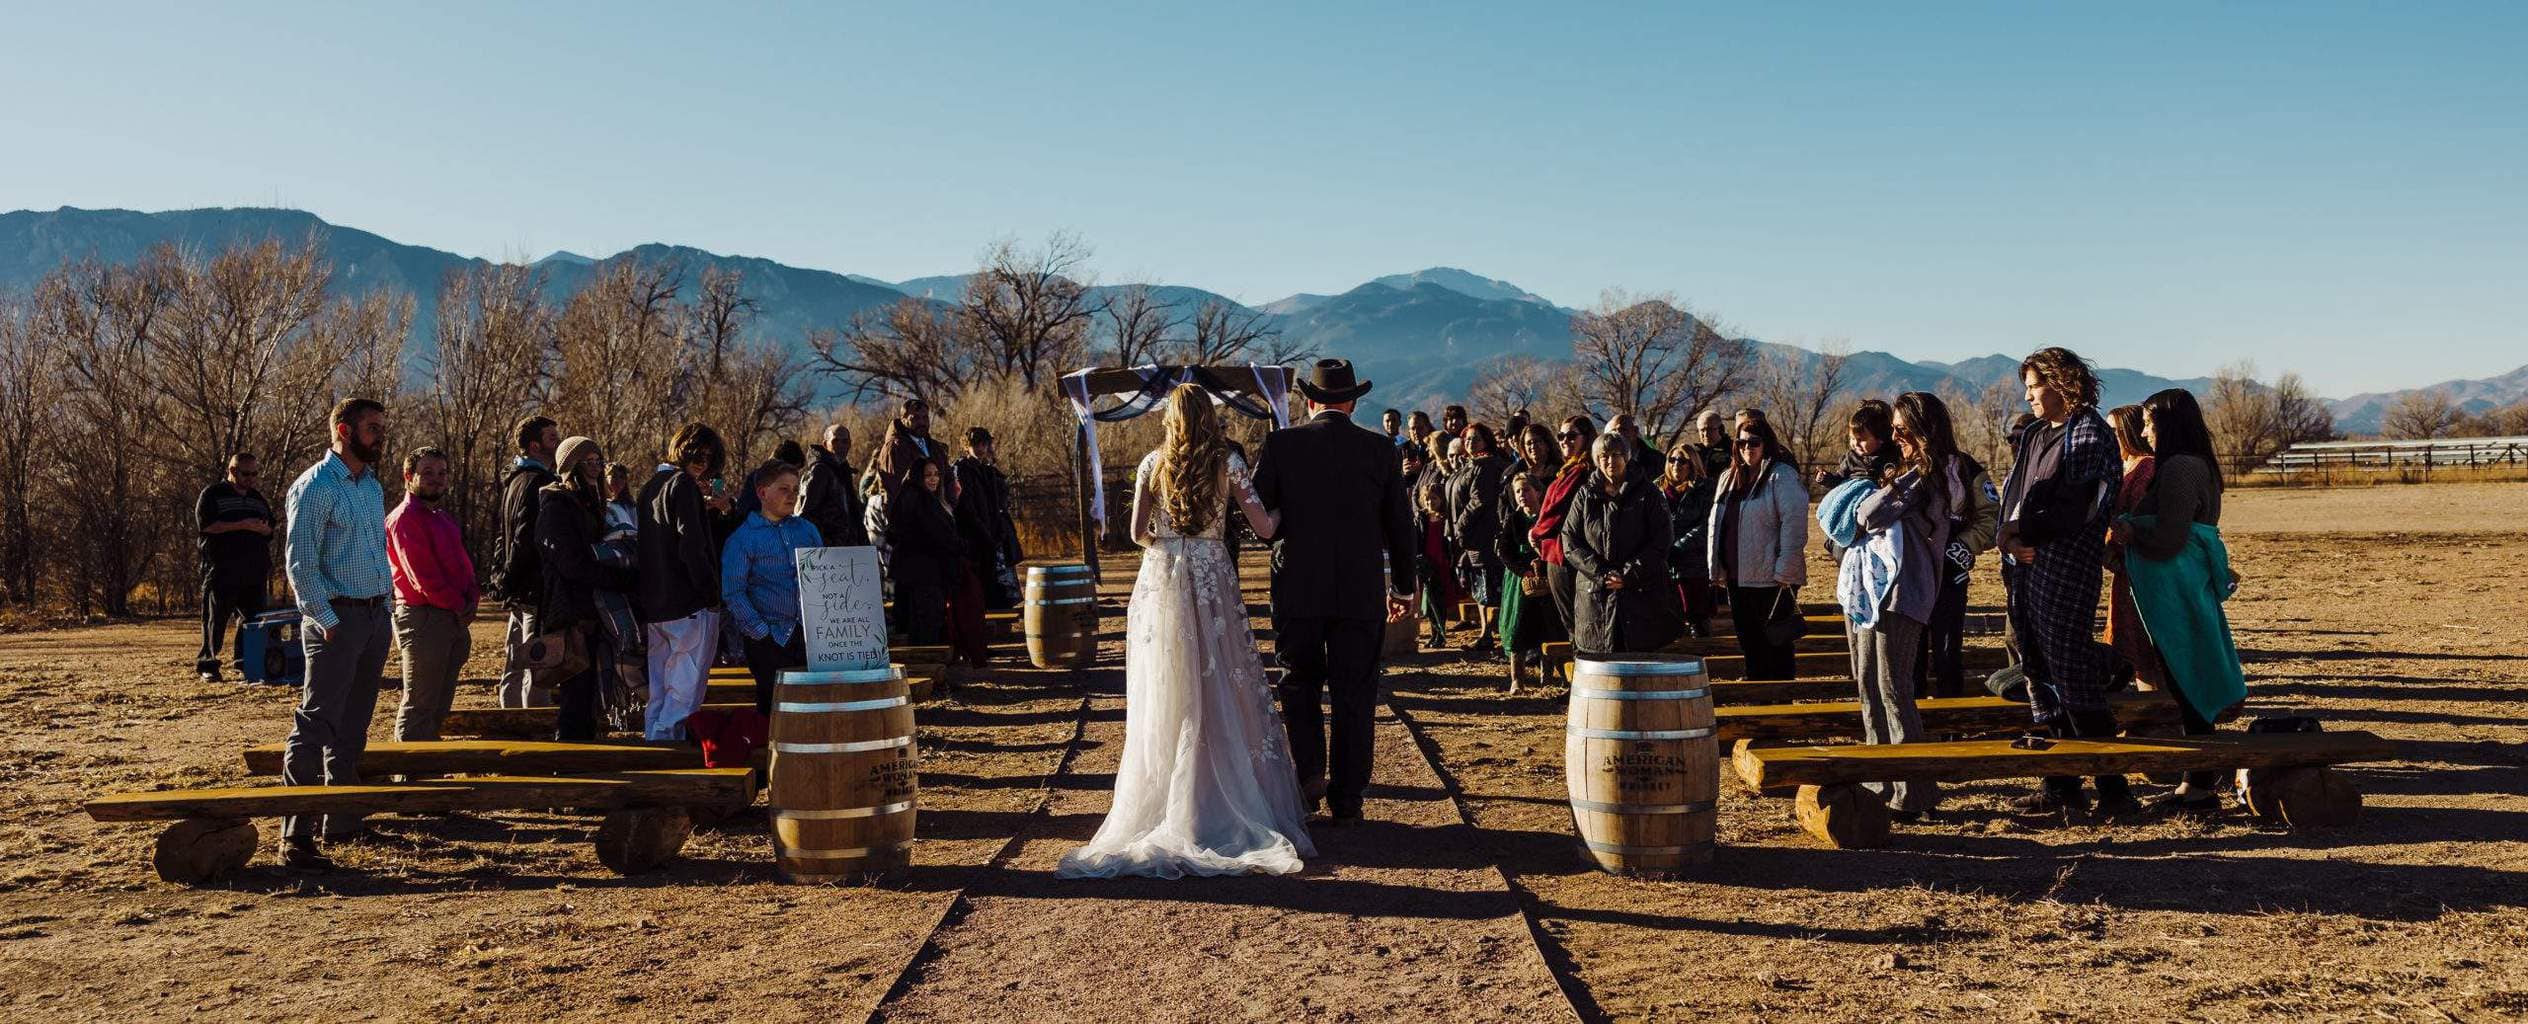 Colorado Springs Wedding Venue with Mountain Views